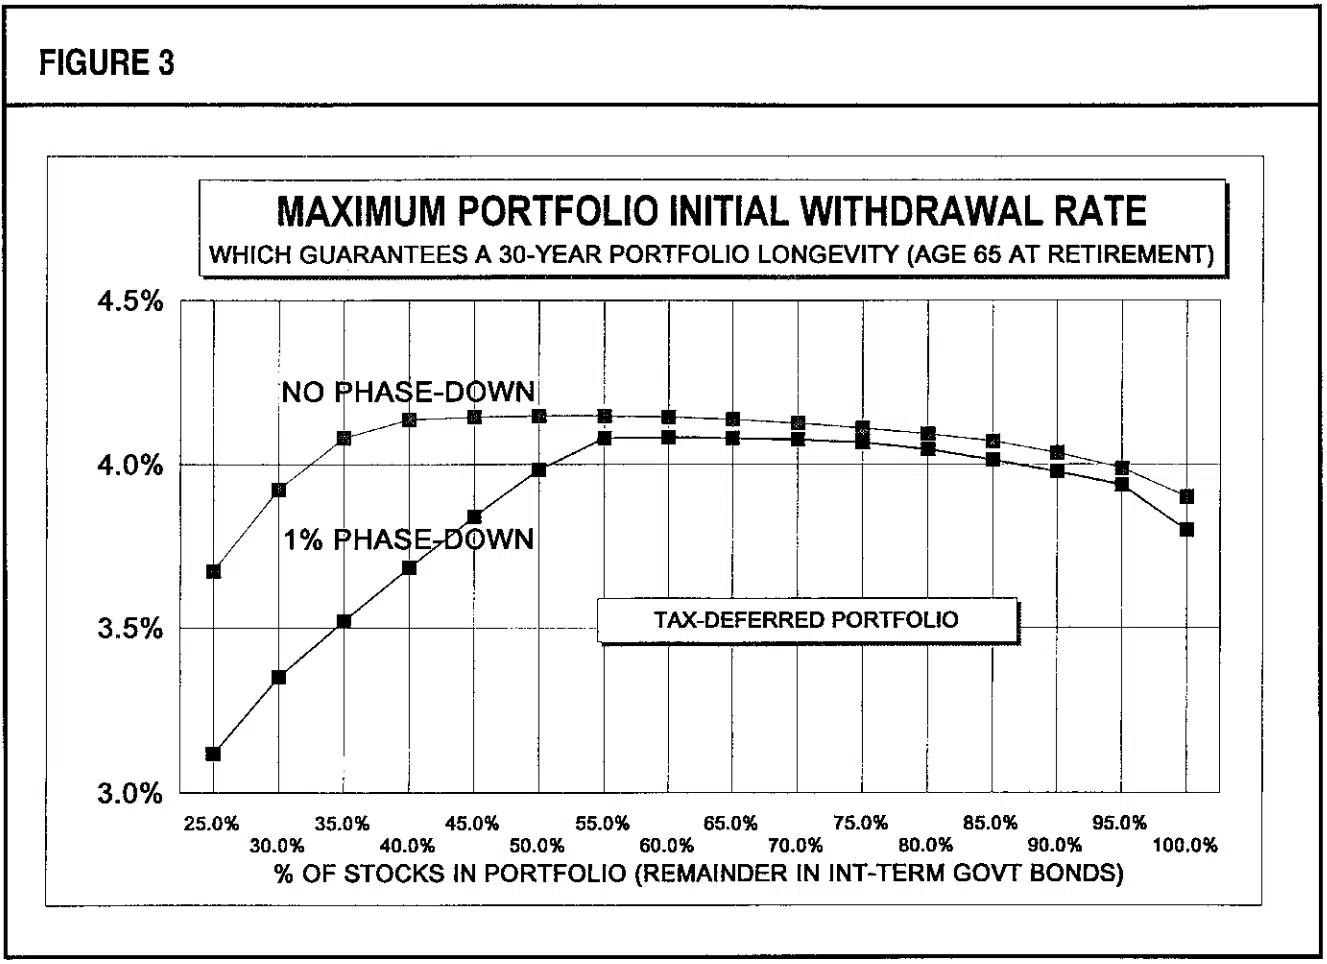 Maximum Portfolio Initial Withdrawal Rate